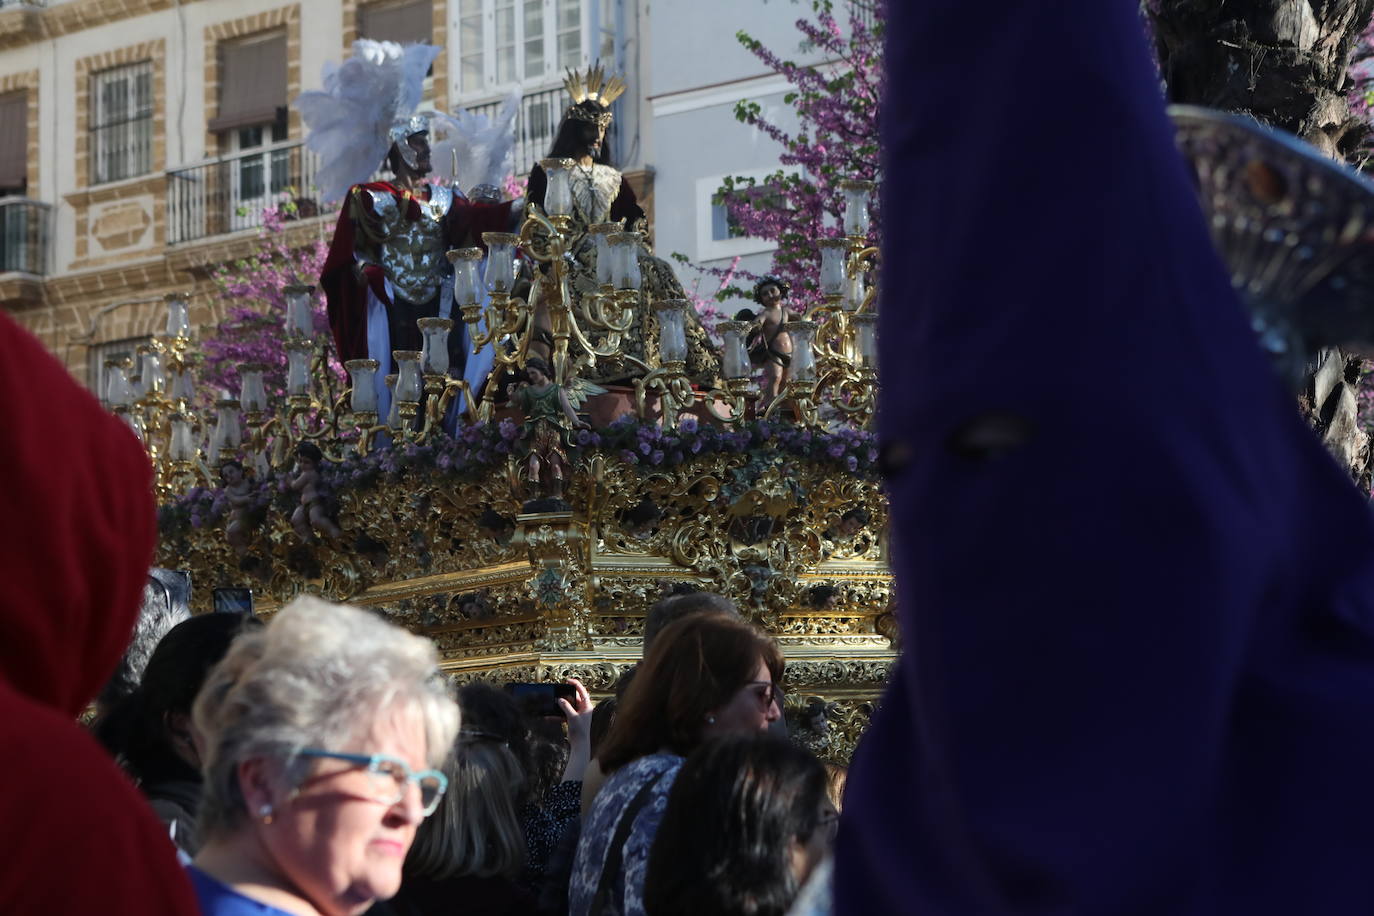 Fotos: La Cigarrera, el Miércoles Santo en Cádiz